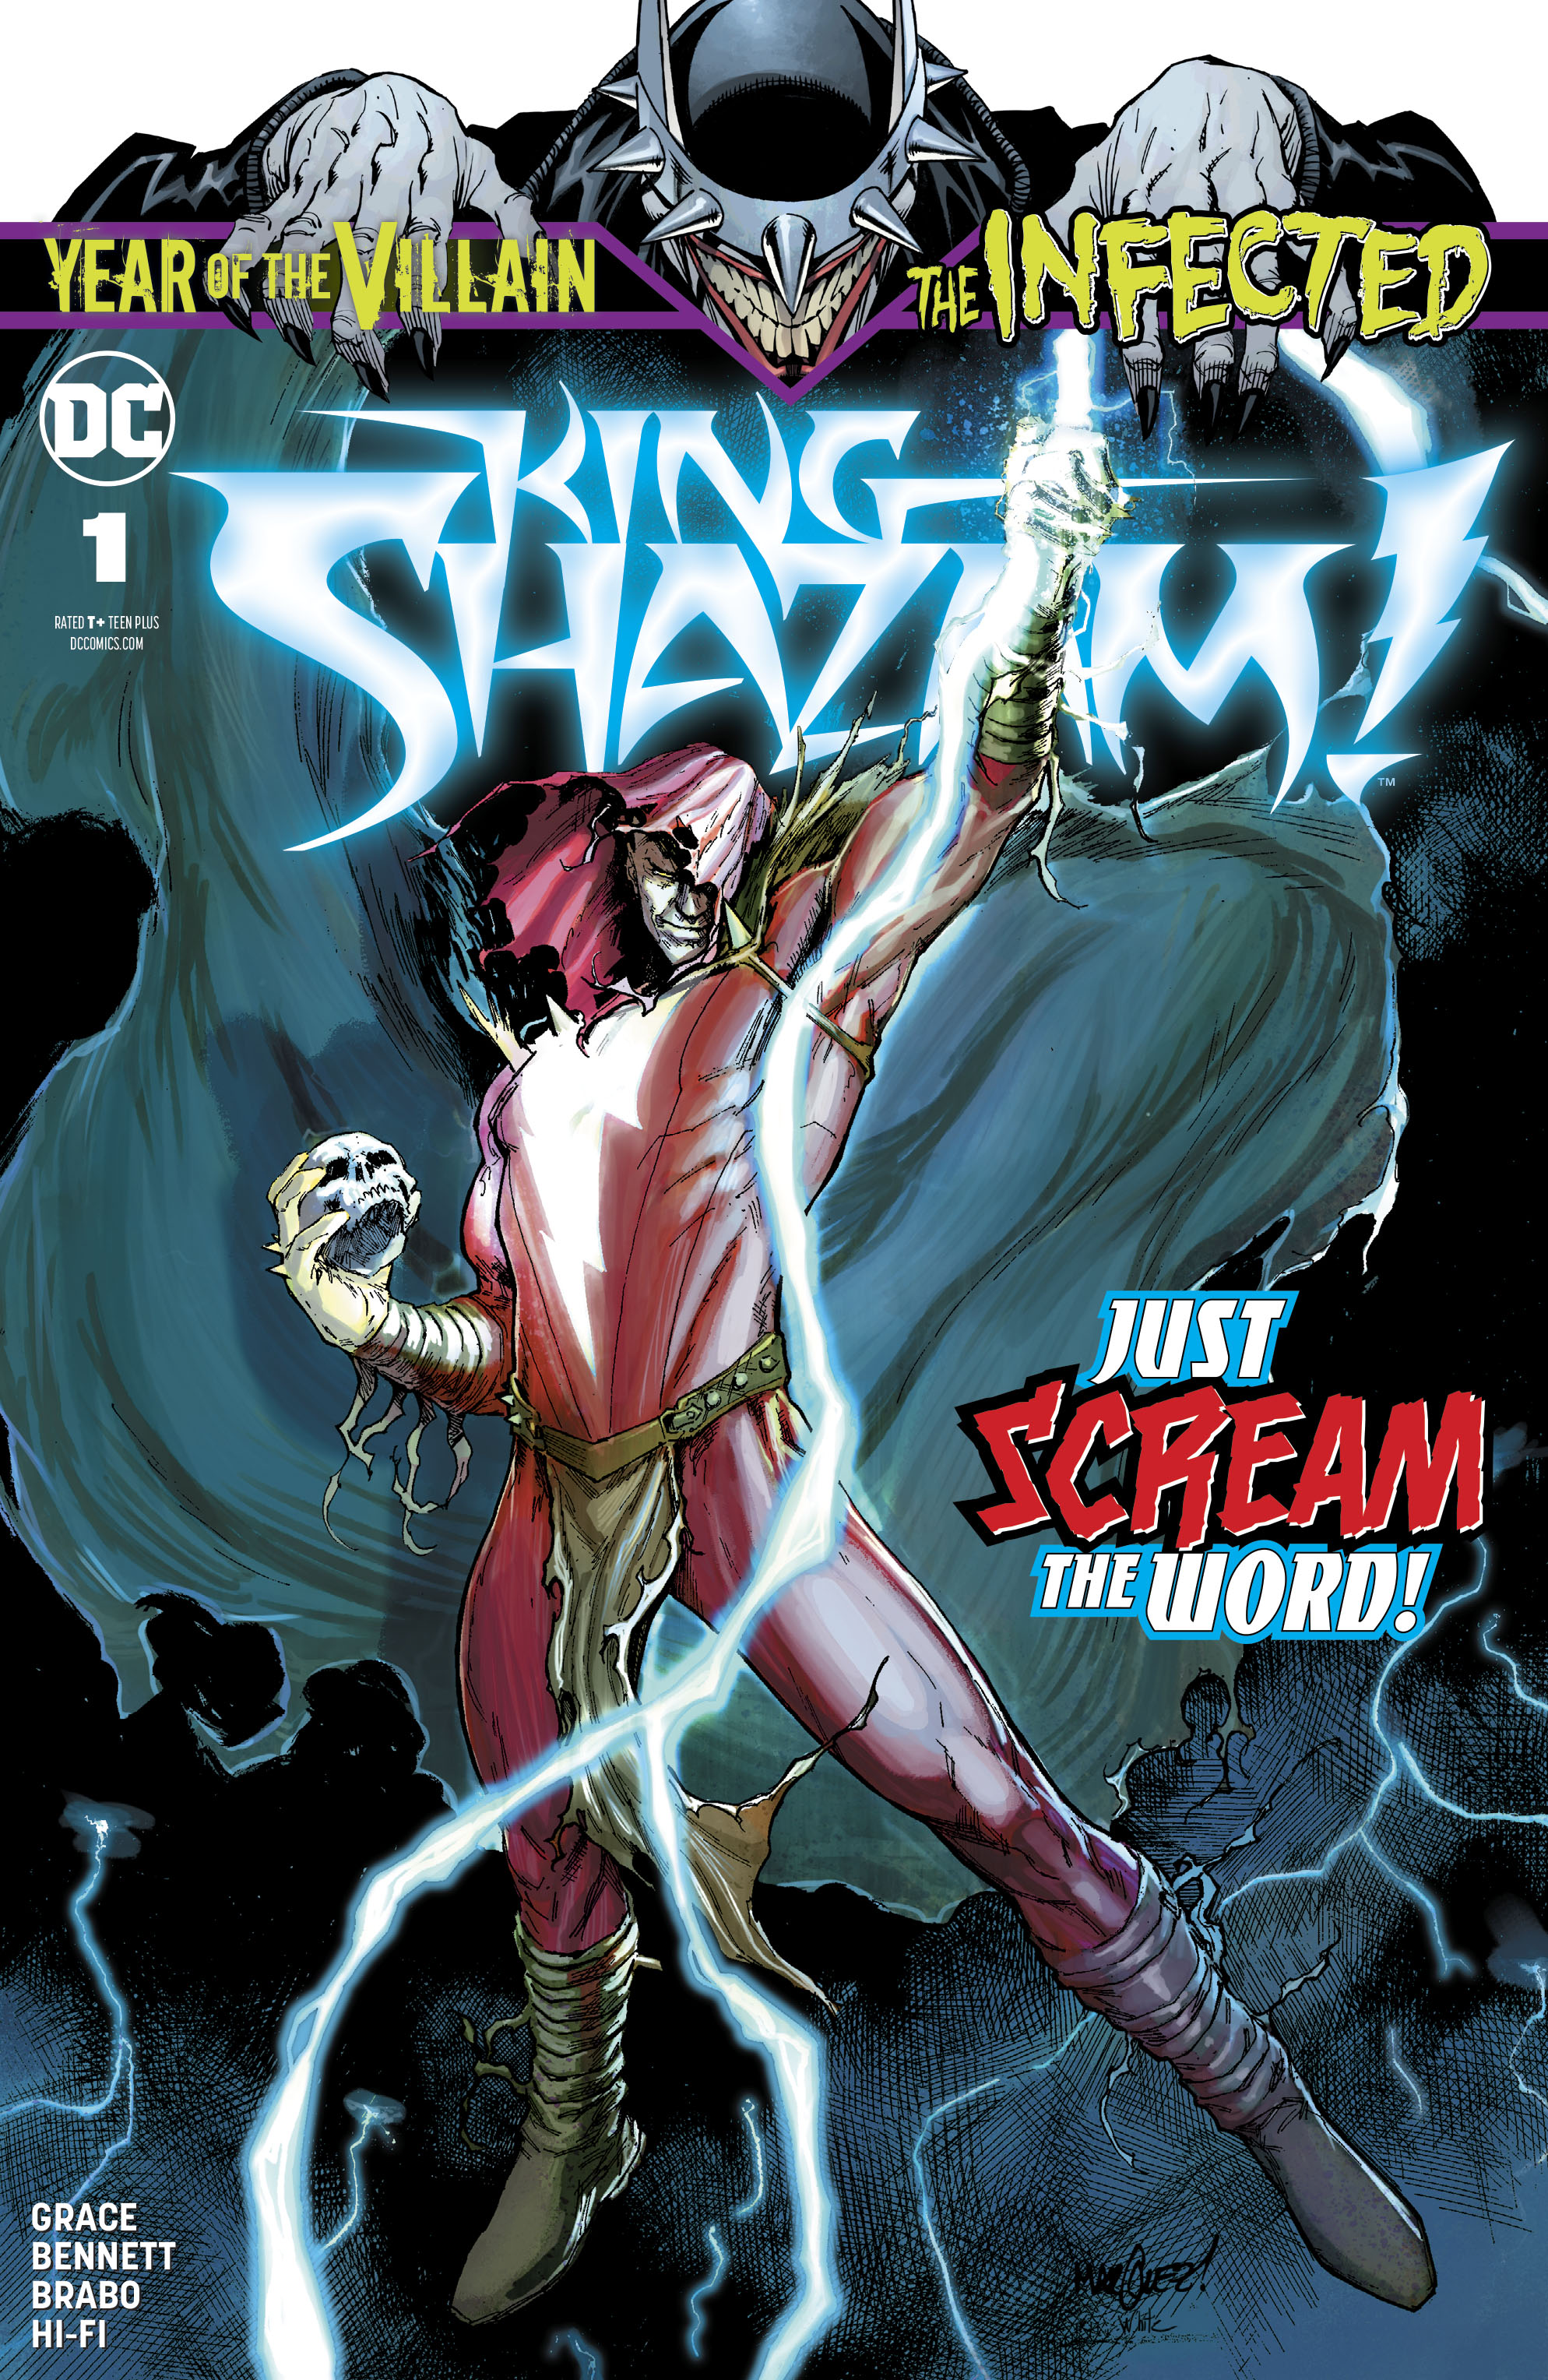 The King Shazam Vol 1 1 | DC Database | Fandom